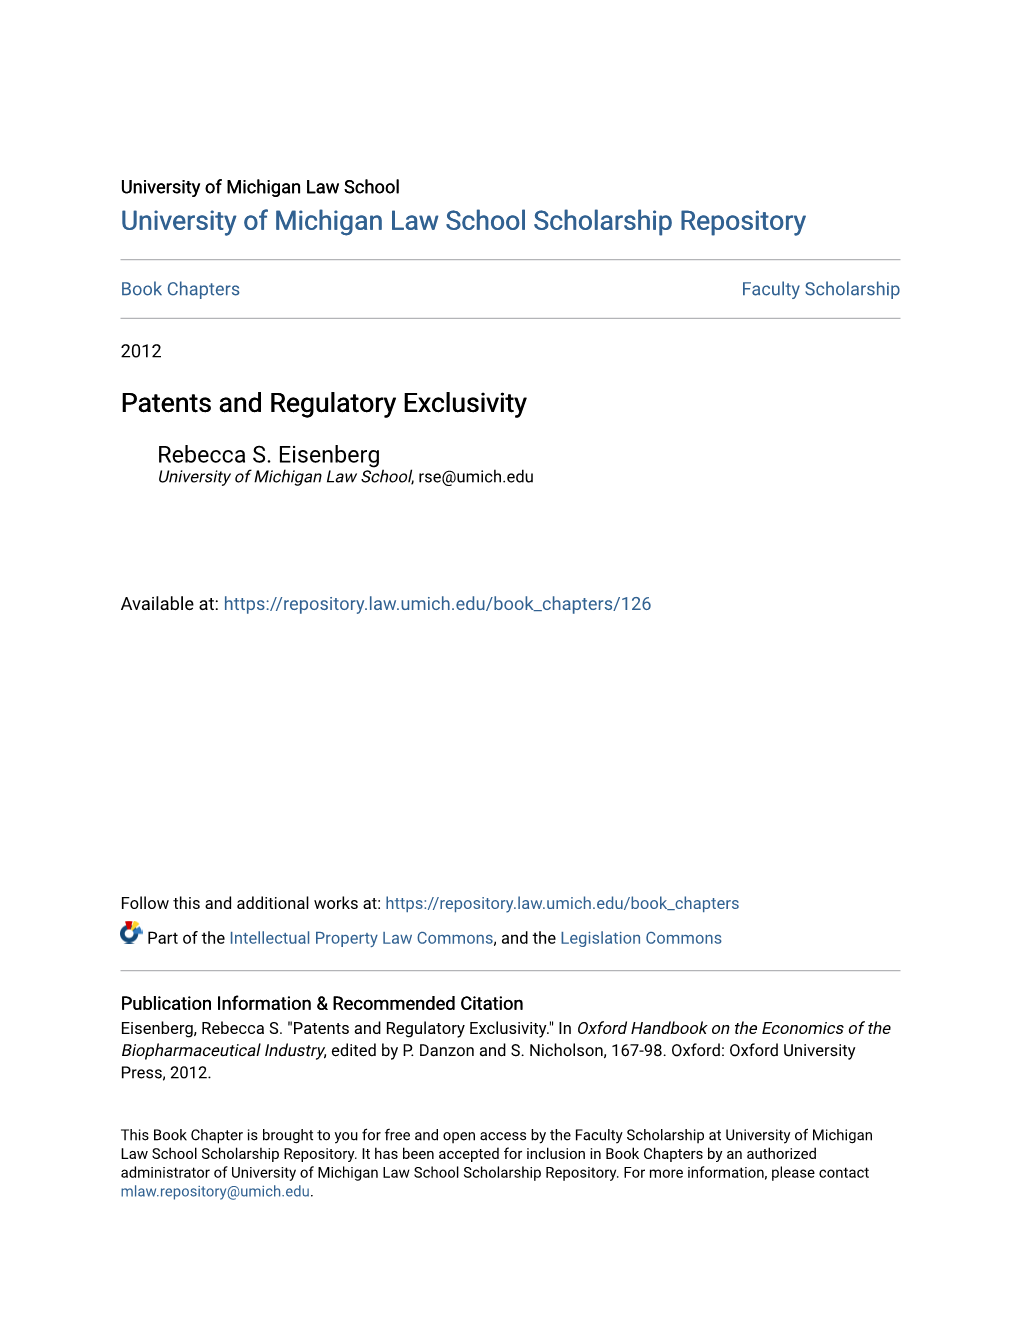 Patents and Regulatory Exclusivity